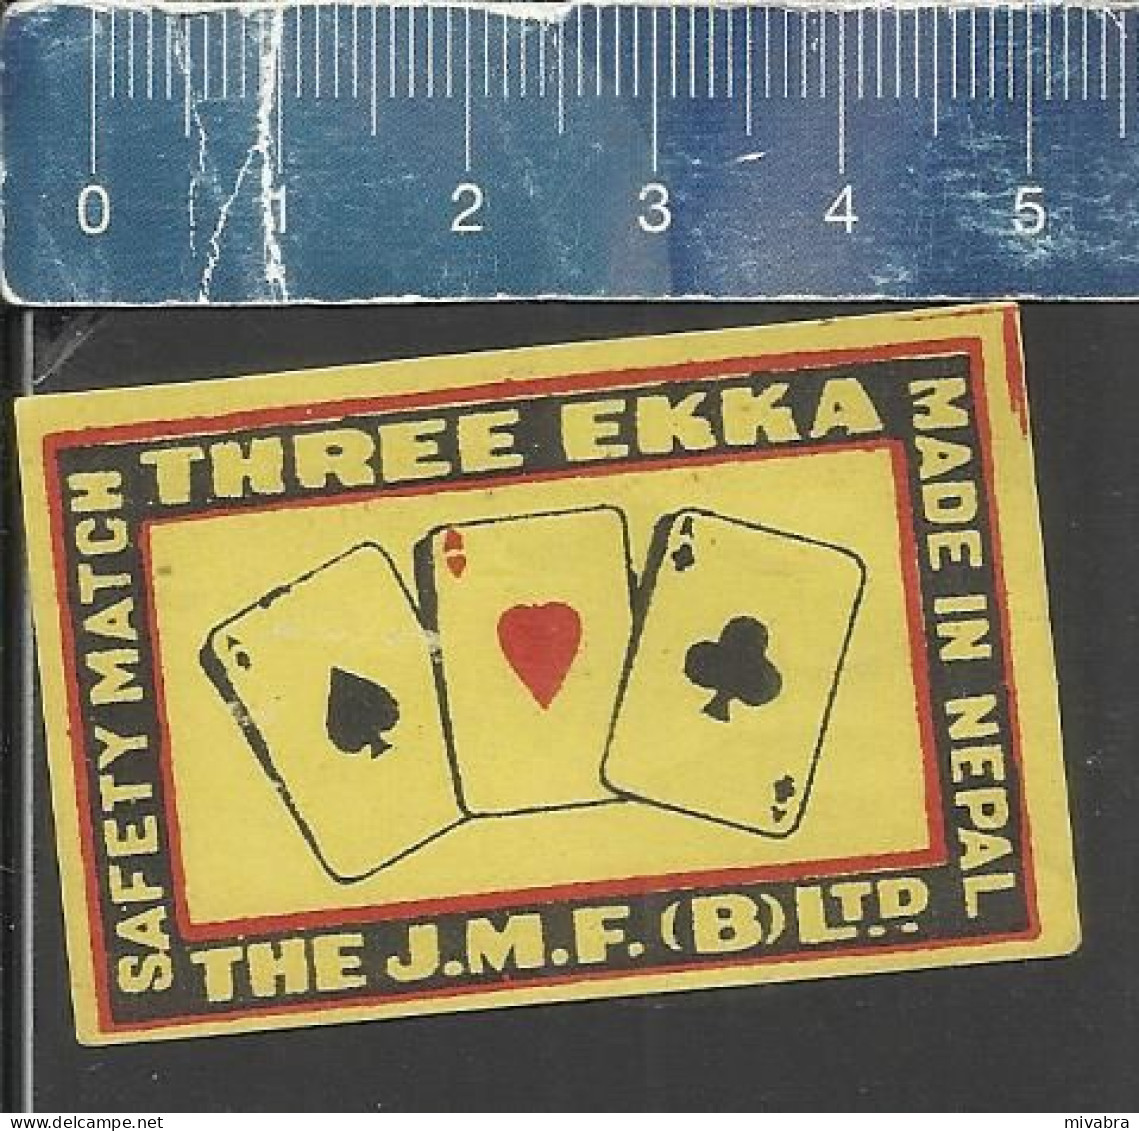 THREE EKKA ( THREE ACES - PLAYING CARDS )  - OLD VINTAGE MATCHBOX LABEL MADE IN NEPAL J.M.F. JOODHA MATCH FACTORY - Luciferdozen - Etiketten